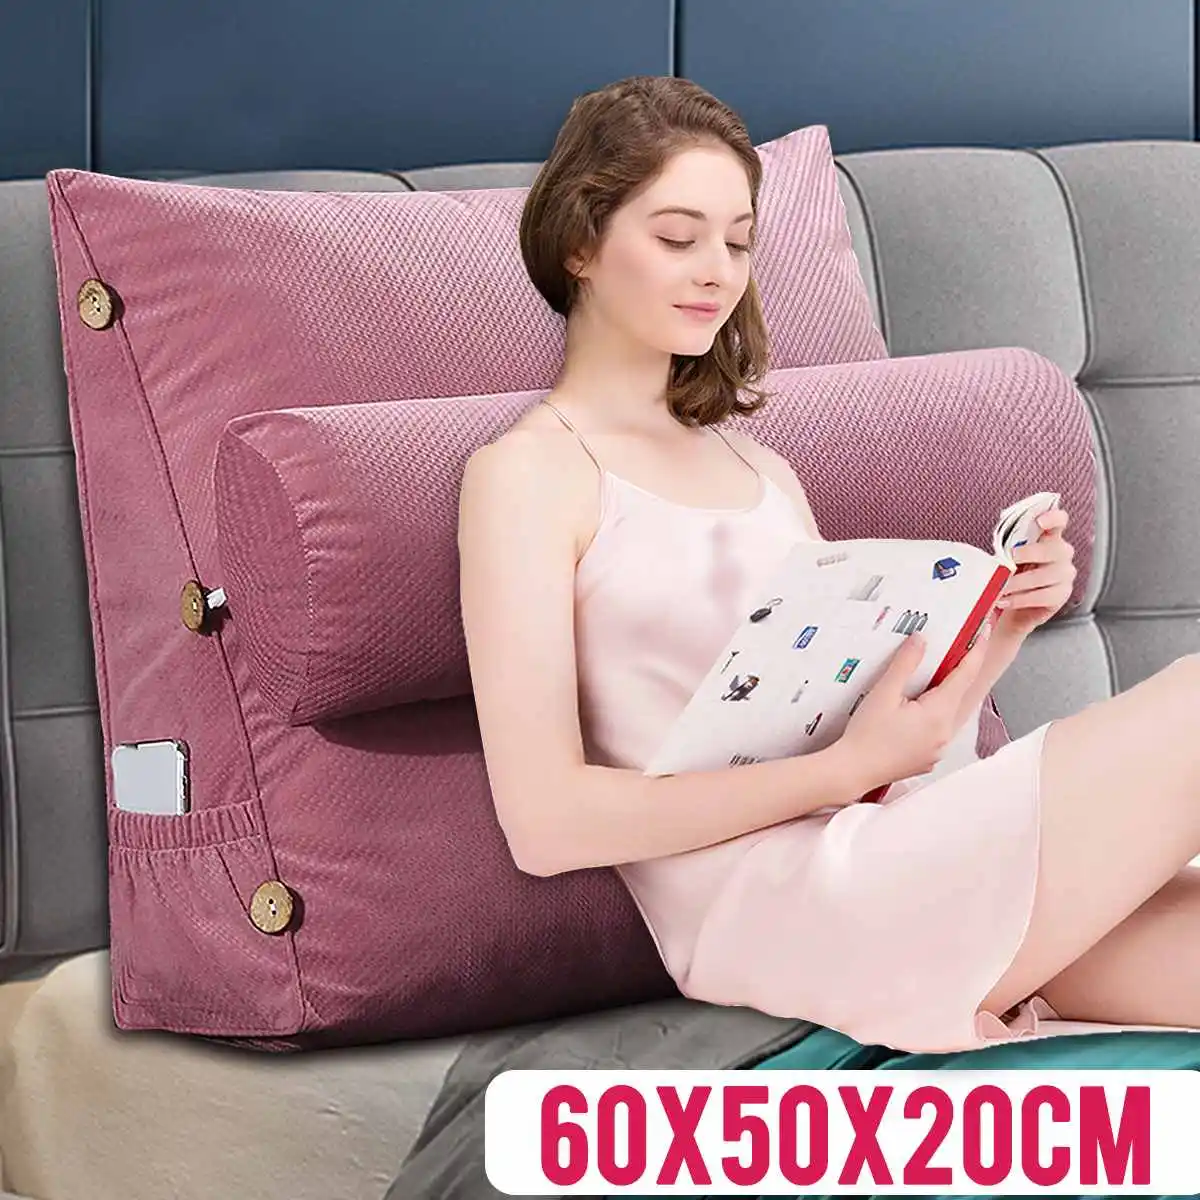 60cmx20cmx50cm Office Chair Back Rest Pillow Support Lumbar Cushion Recliner TV Reading Pillows for Living Room Home Decor